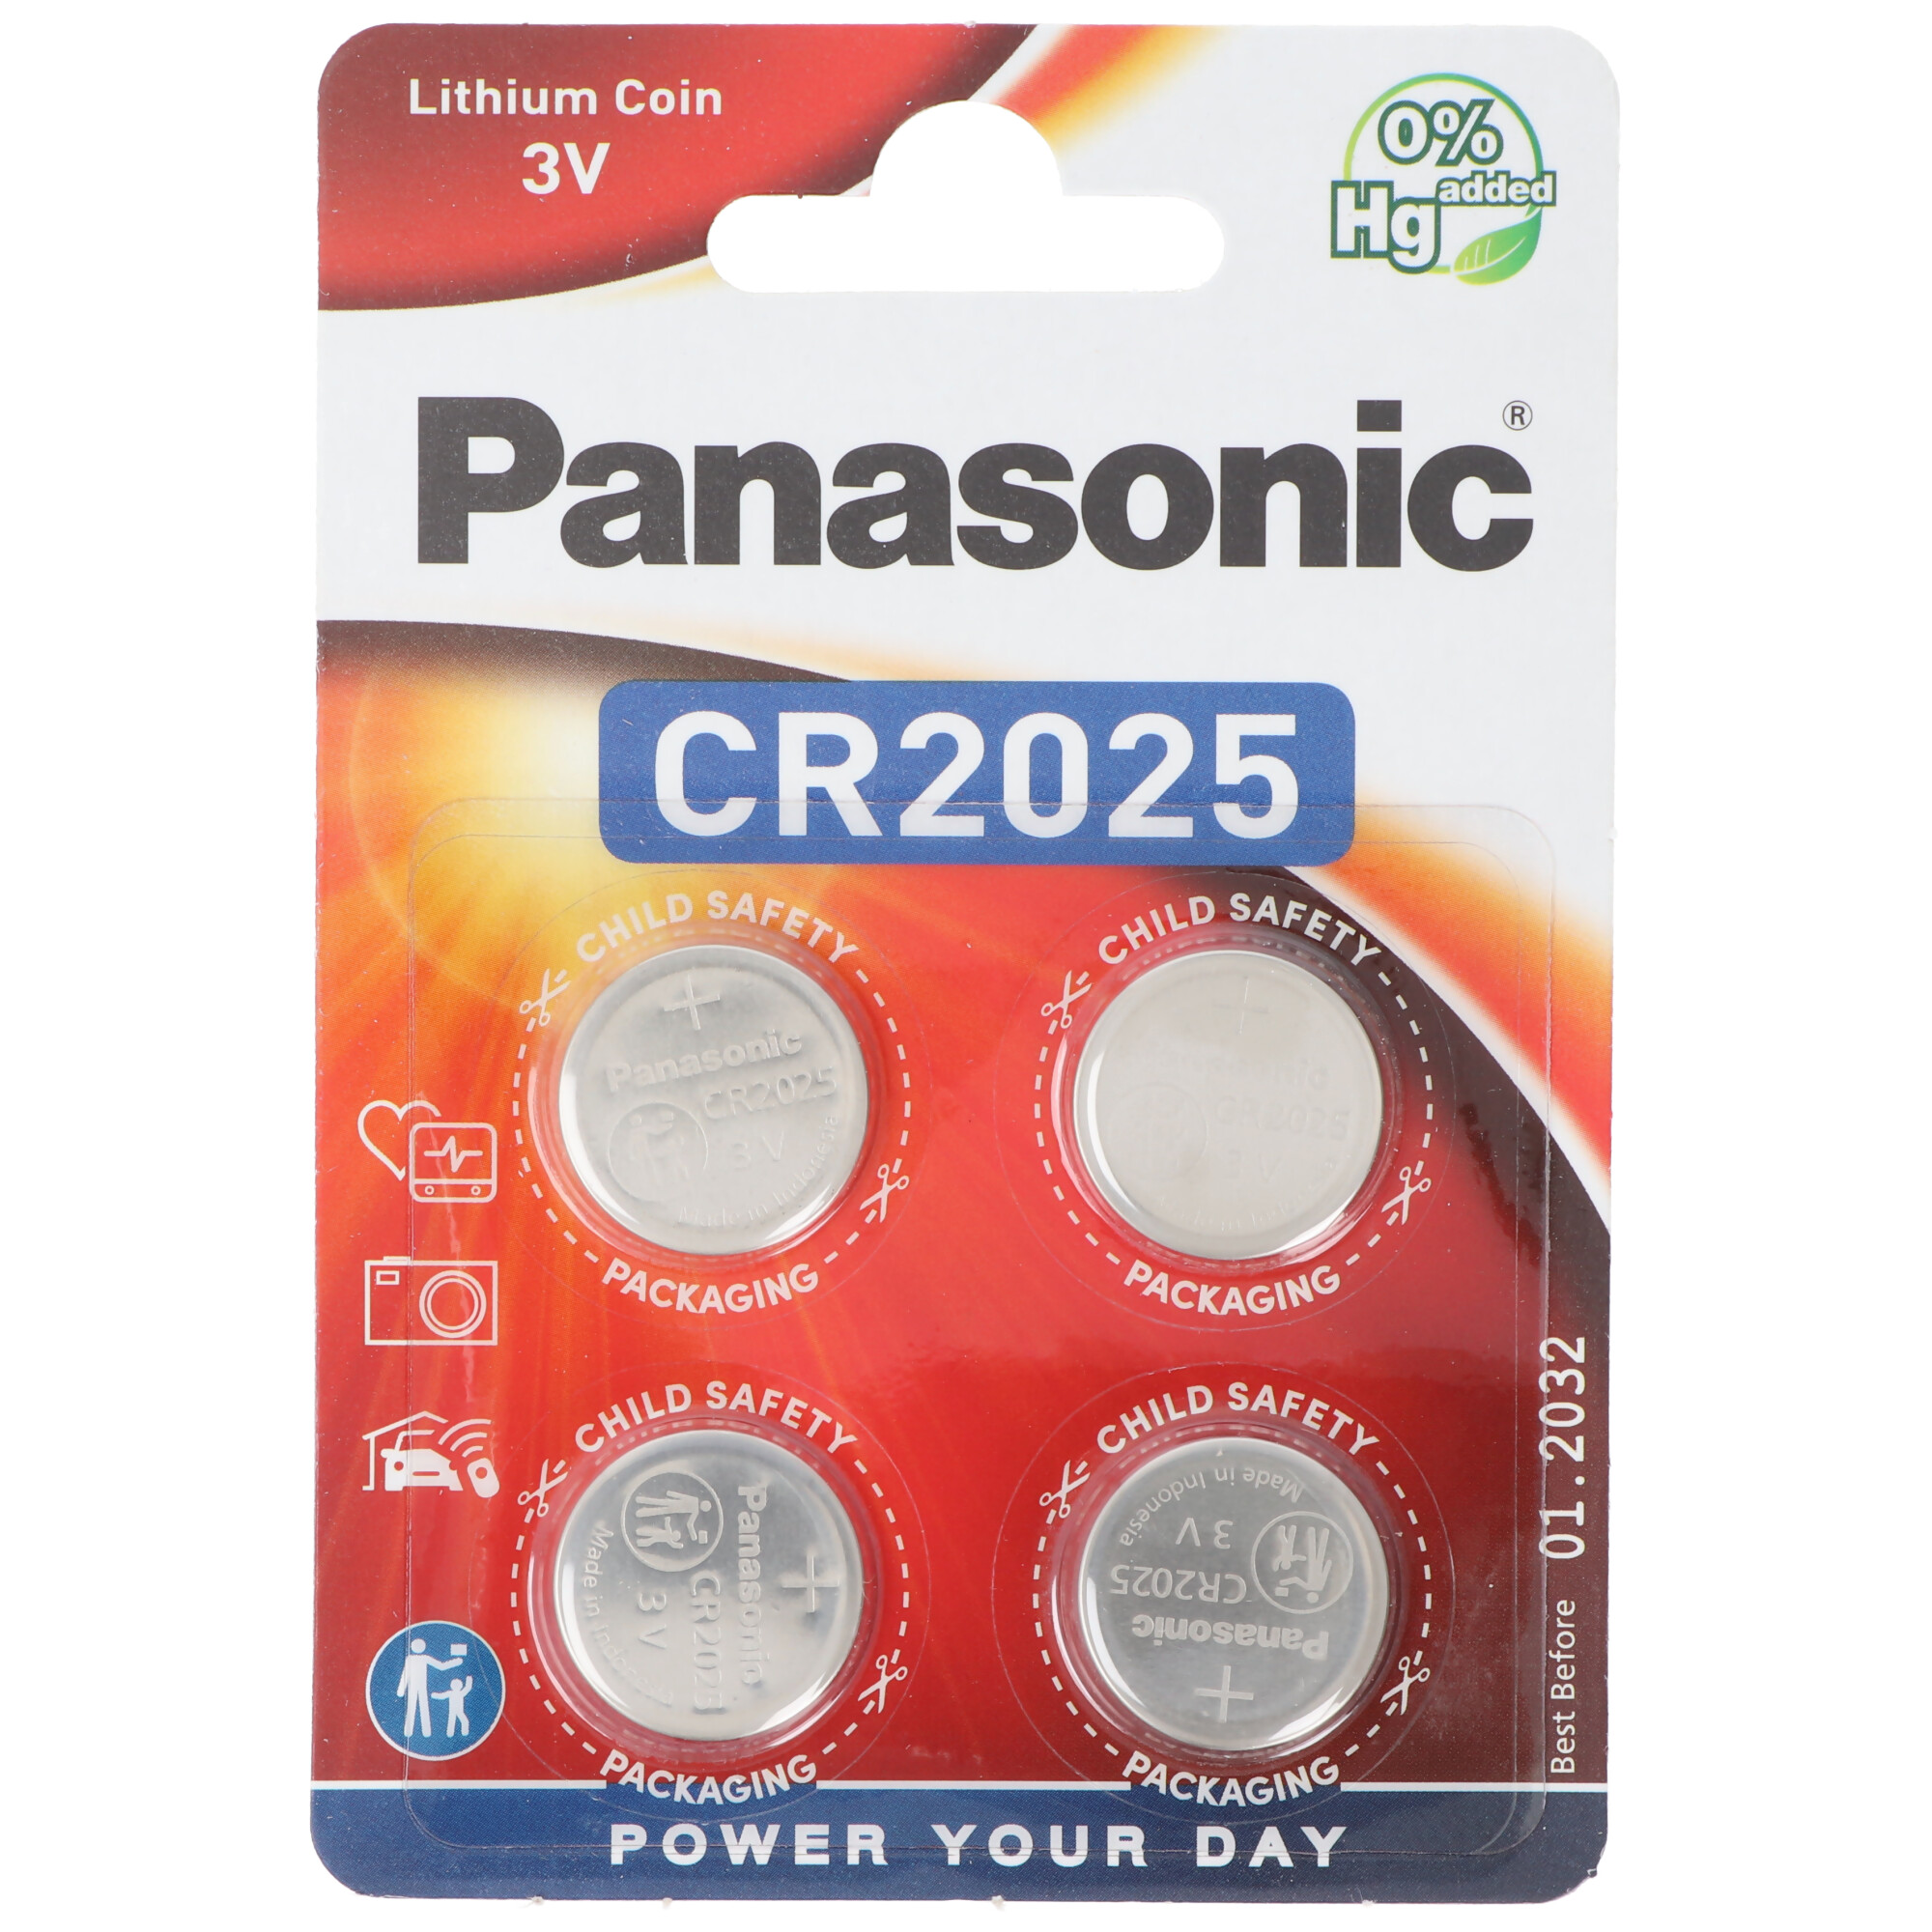 Panasonic Batterie Lithium, Knopfzelle, CR2025, 3V Electronics, Lithium Power, Retail Blister (4-Pack)